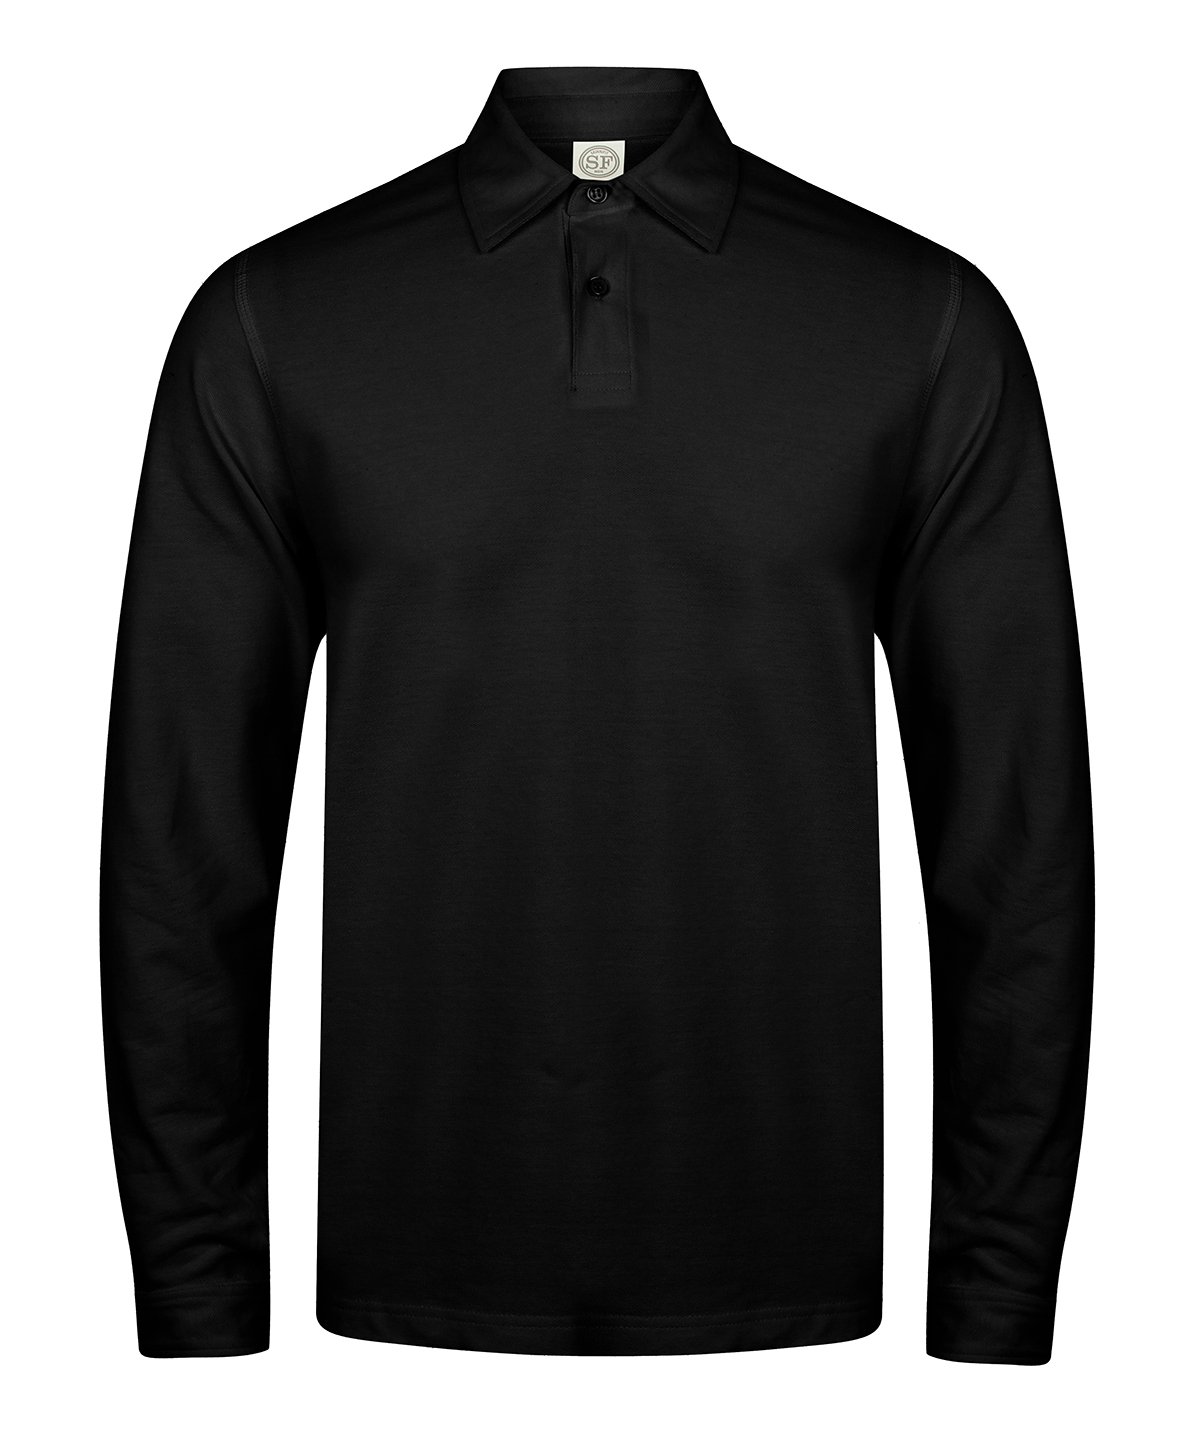 Skinni Fit Men's Stretch Fabric Long Sleeve Polo Shirt SFM44